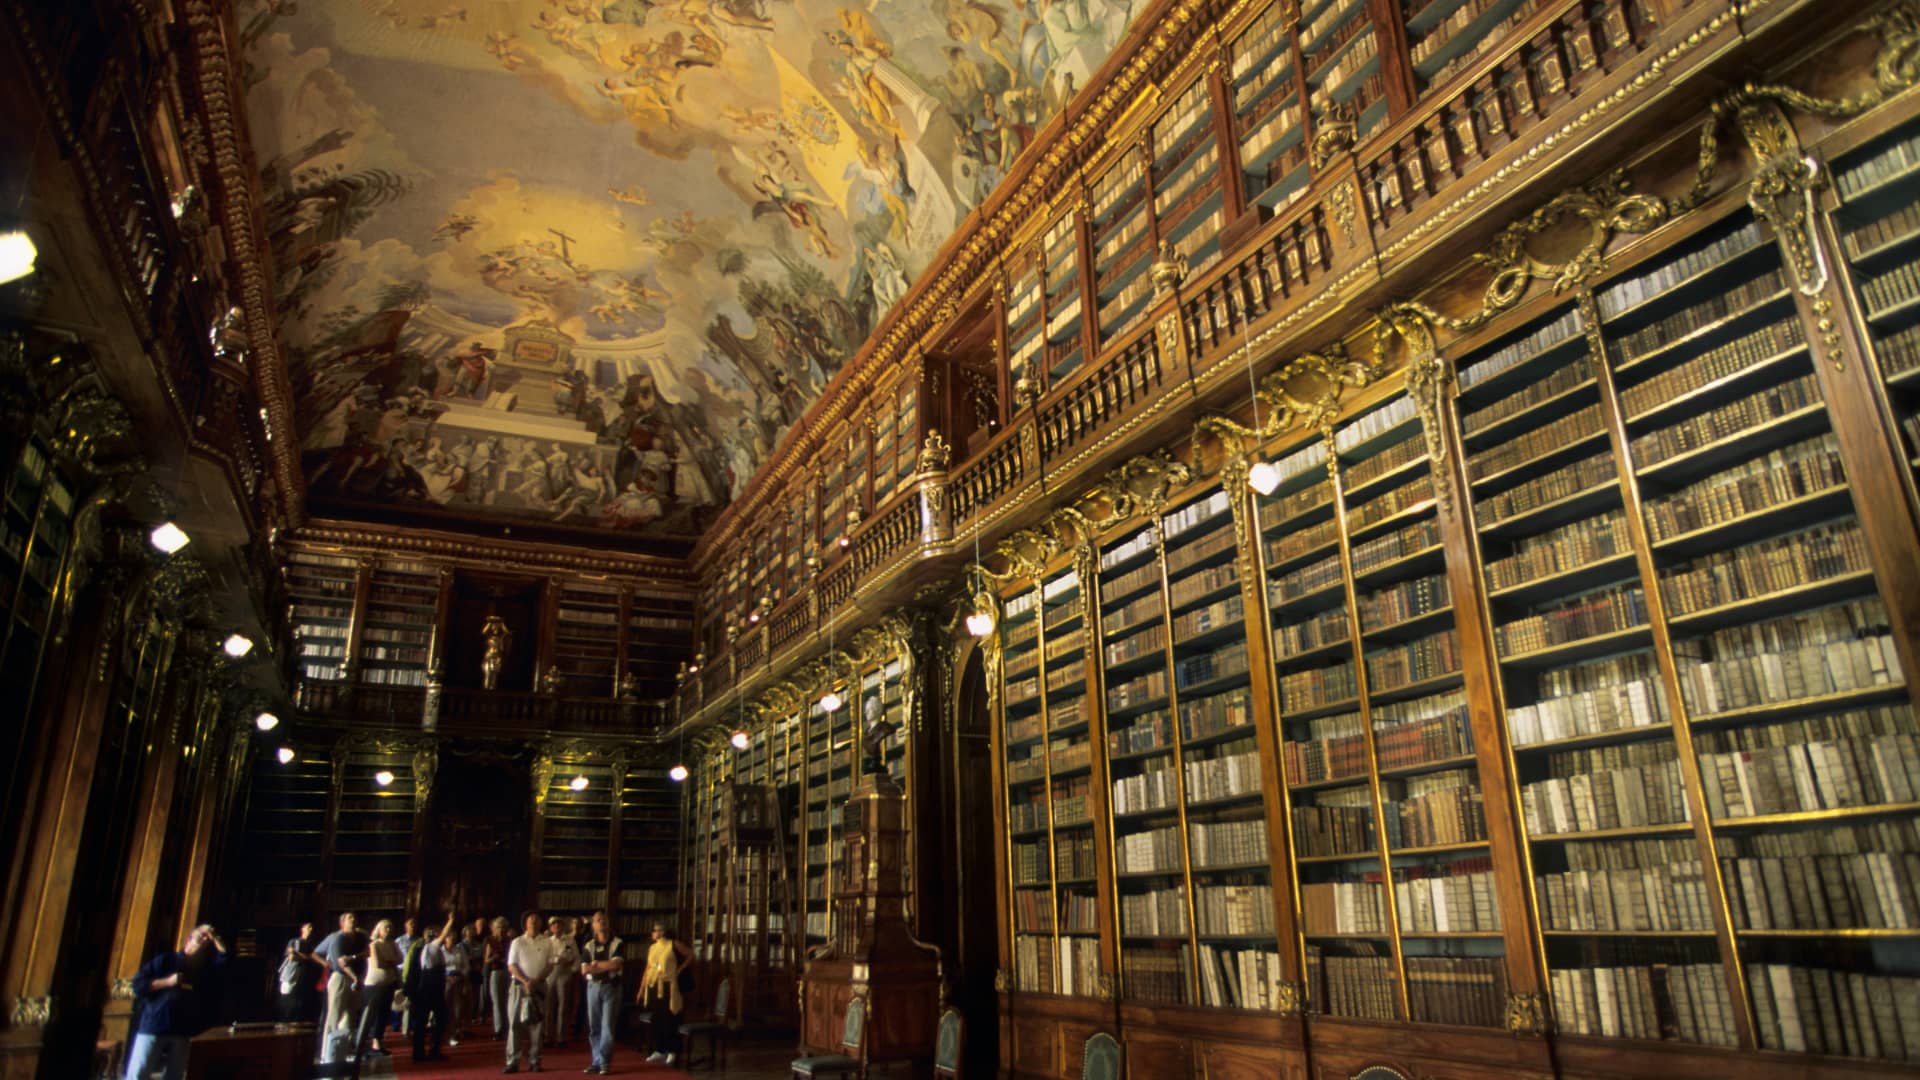 The library in Prague's Strahov Monastery.